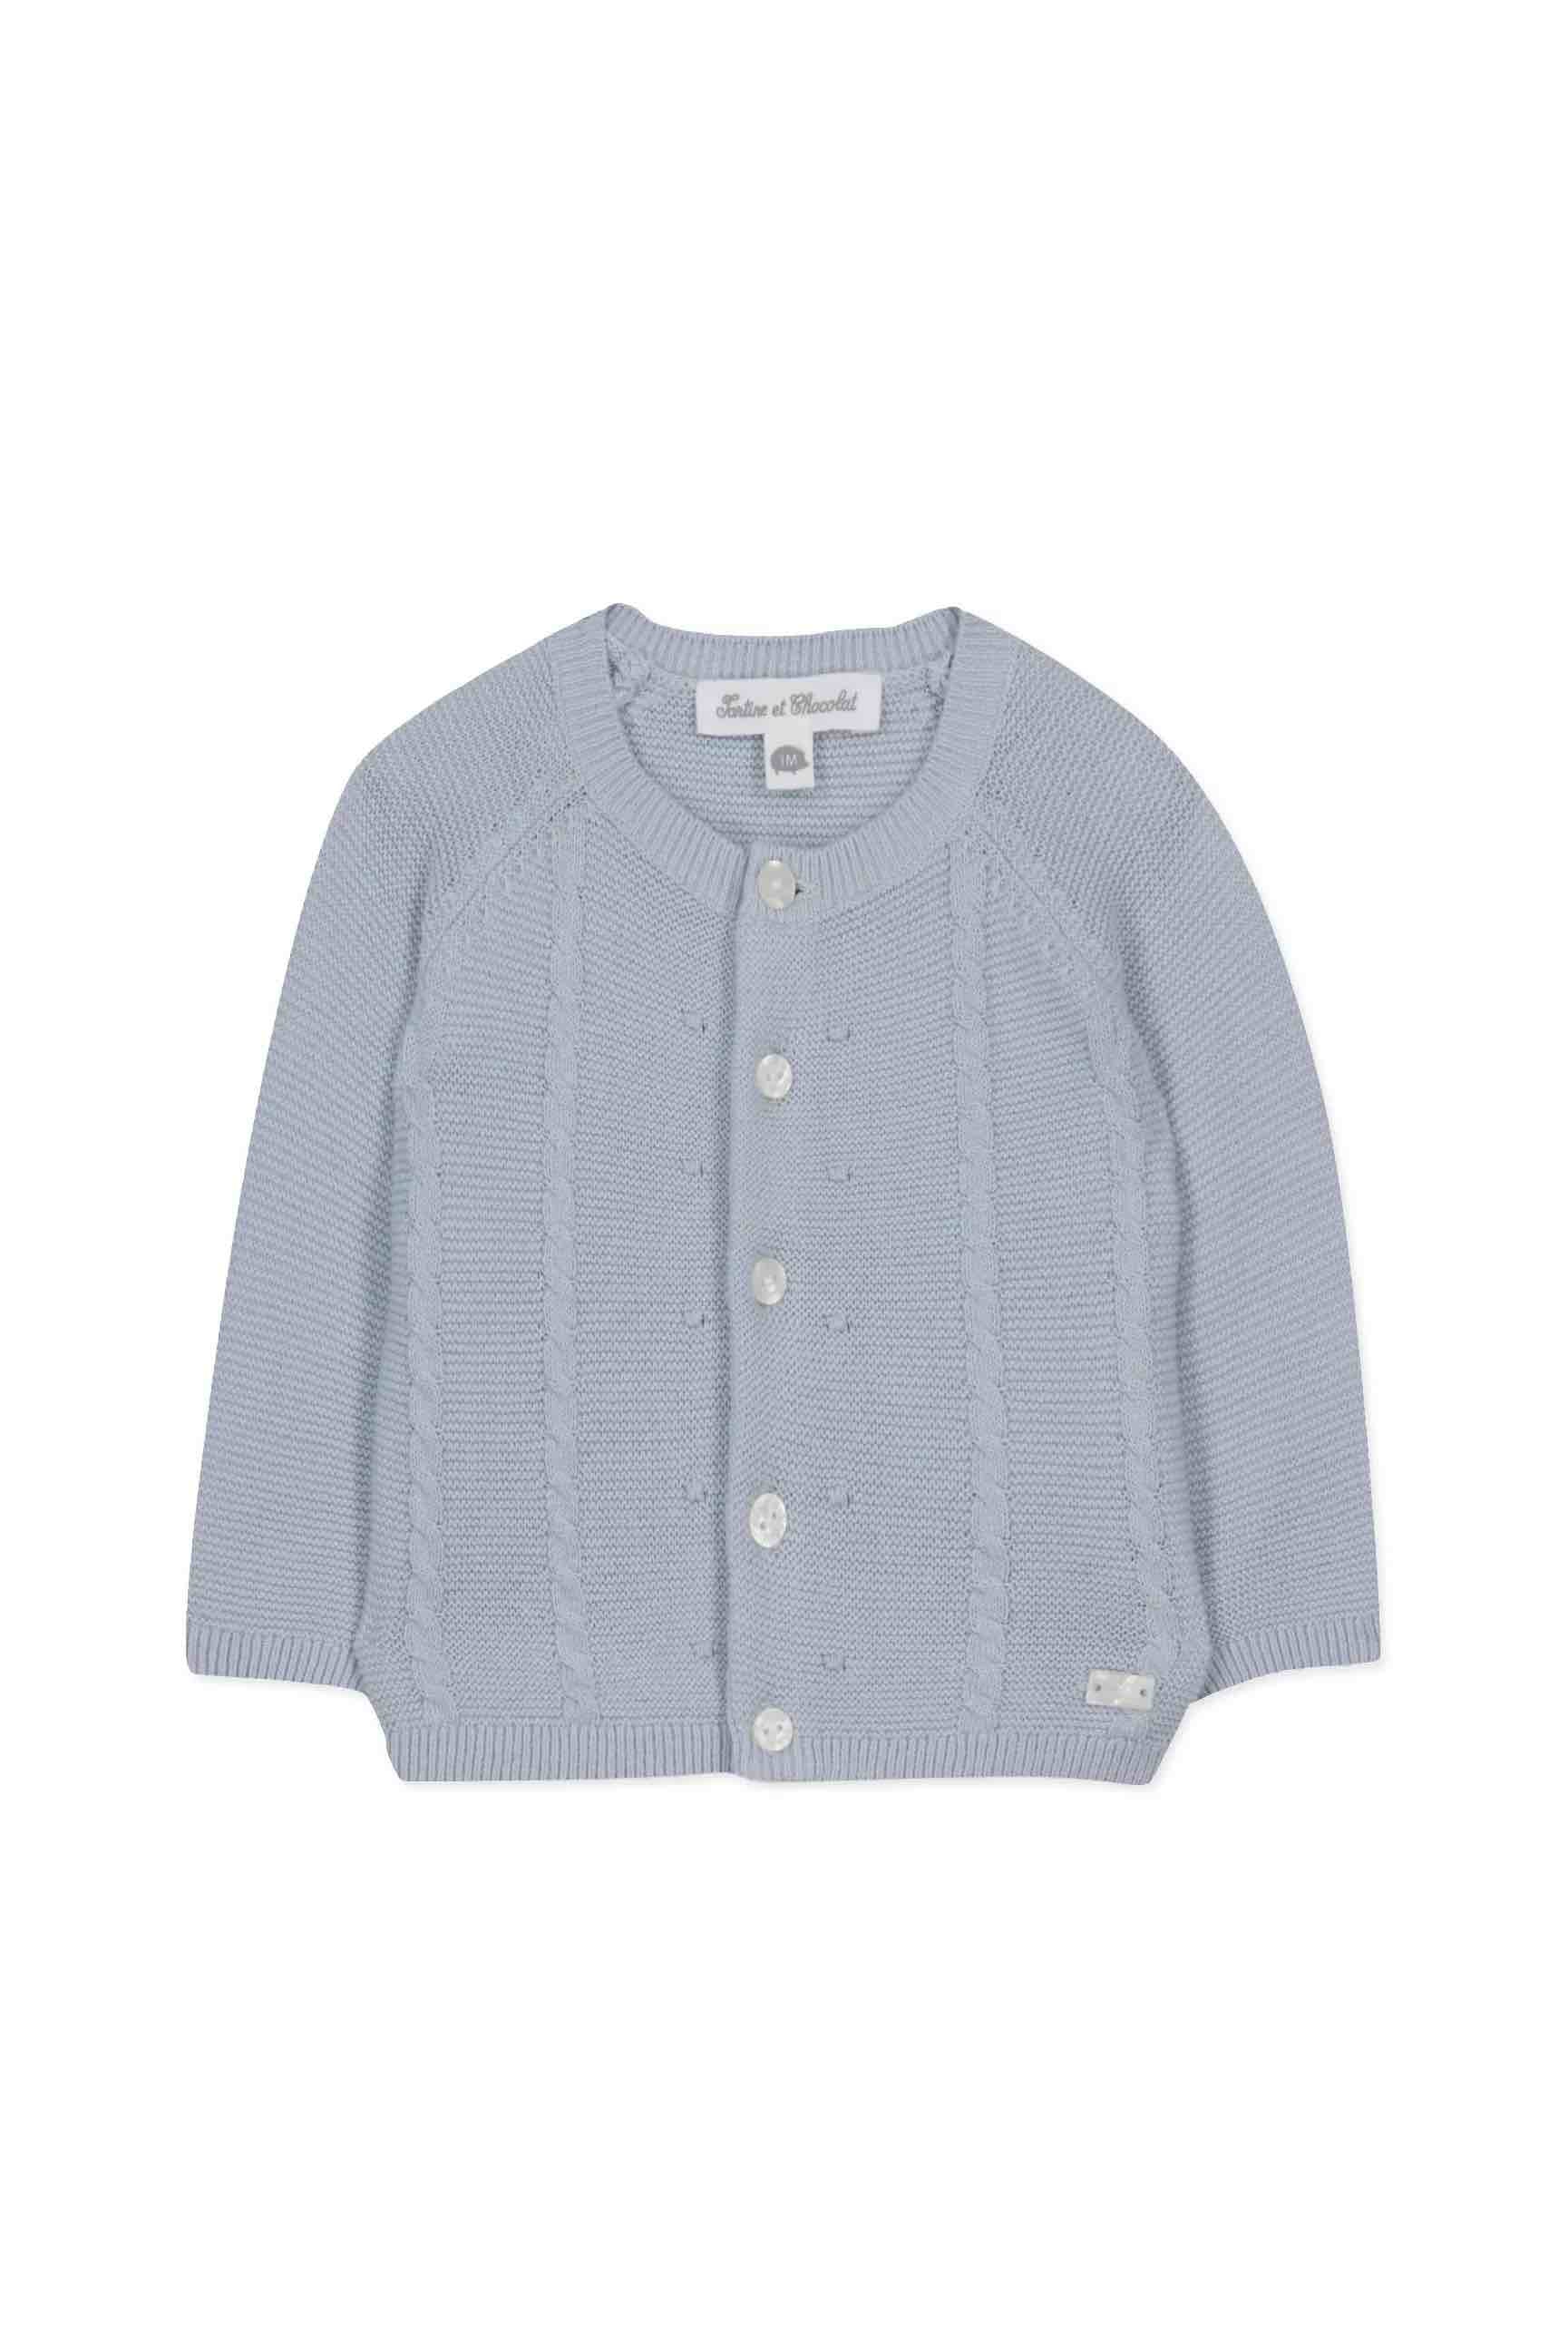 Knitted Cardigan - Grey Blue - GEMINI ATELIER